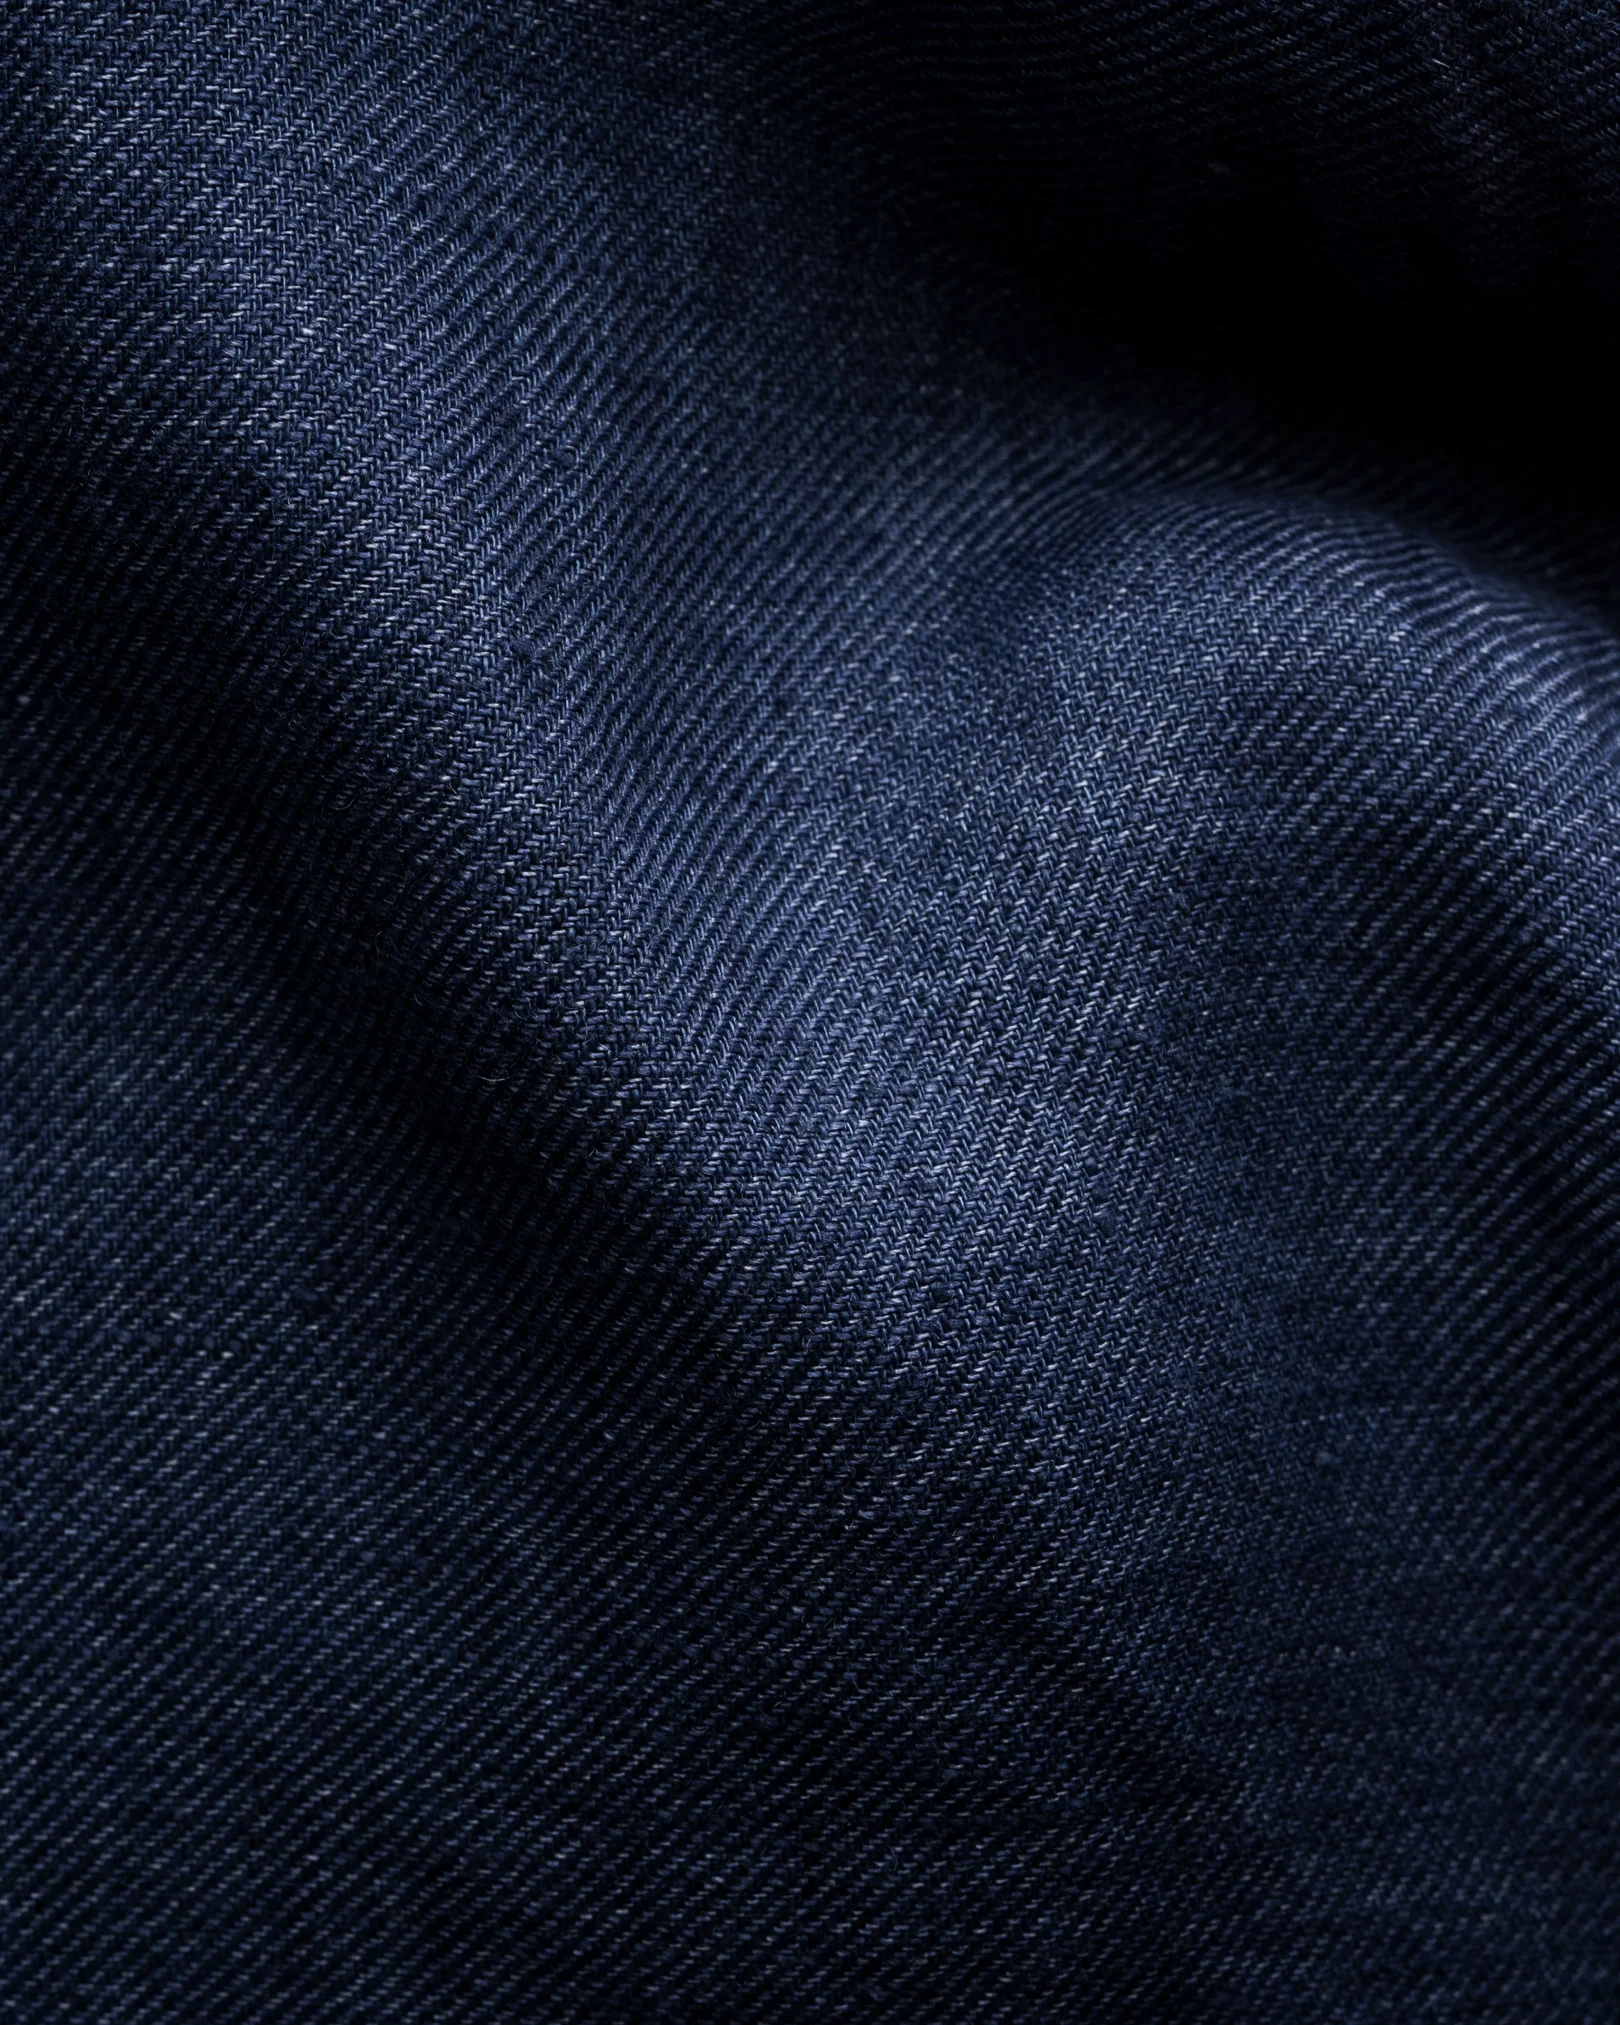 Eton - Navy Linen Twill Shirt